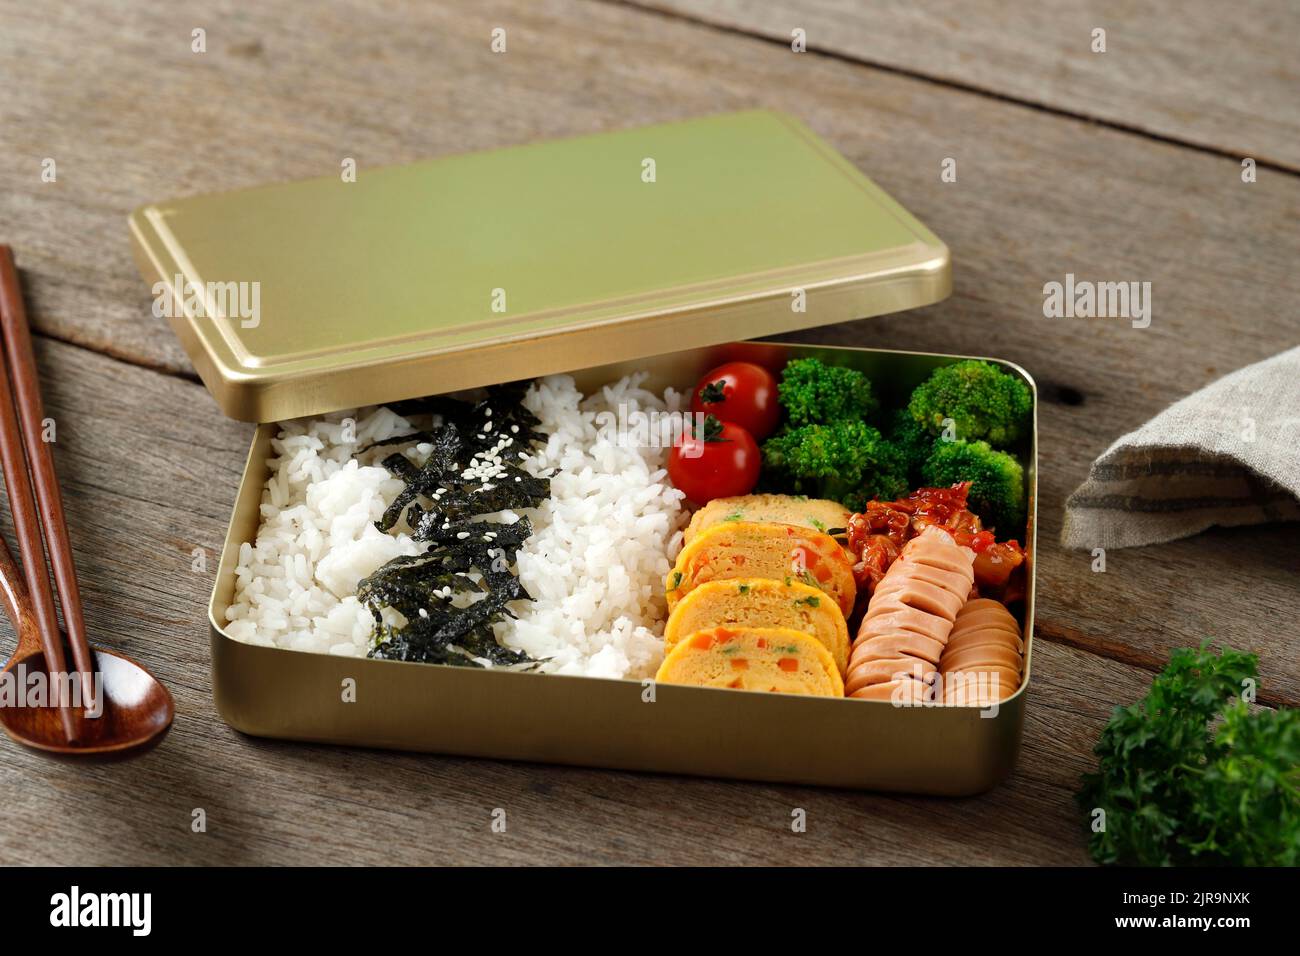 https://c8.alamy.com/comp/2JR9NXK/dosirak-korean-lunch-box-contain-steamed-rice-with-gyeranmari-sausage-kimchi-tomato-and-steamed-broccoli-on-wooden-table-2JR9NXK.jpg